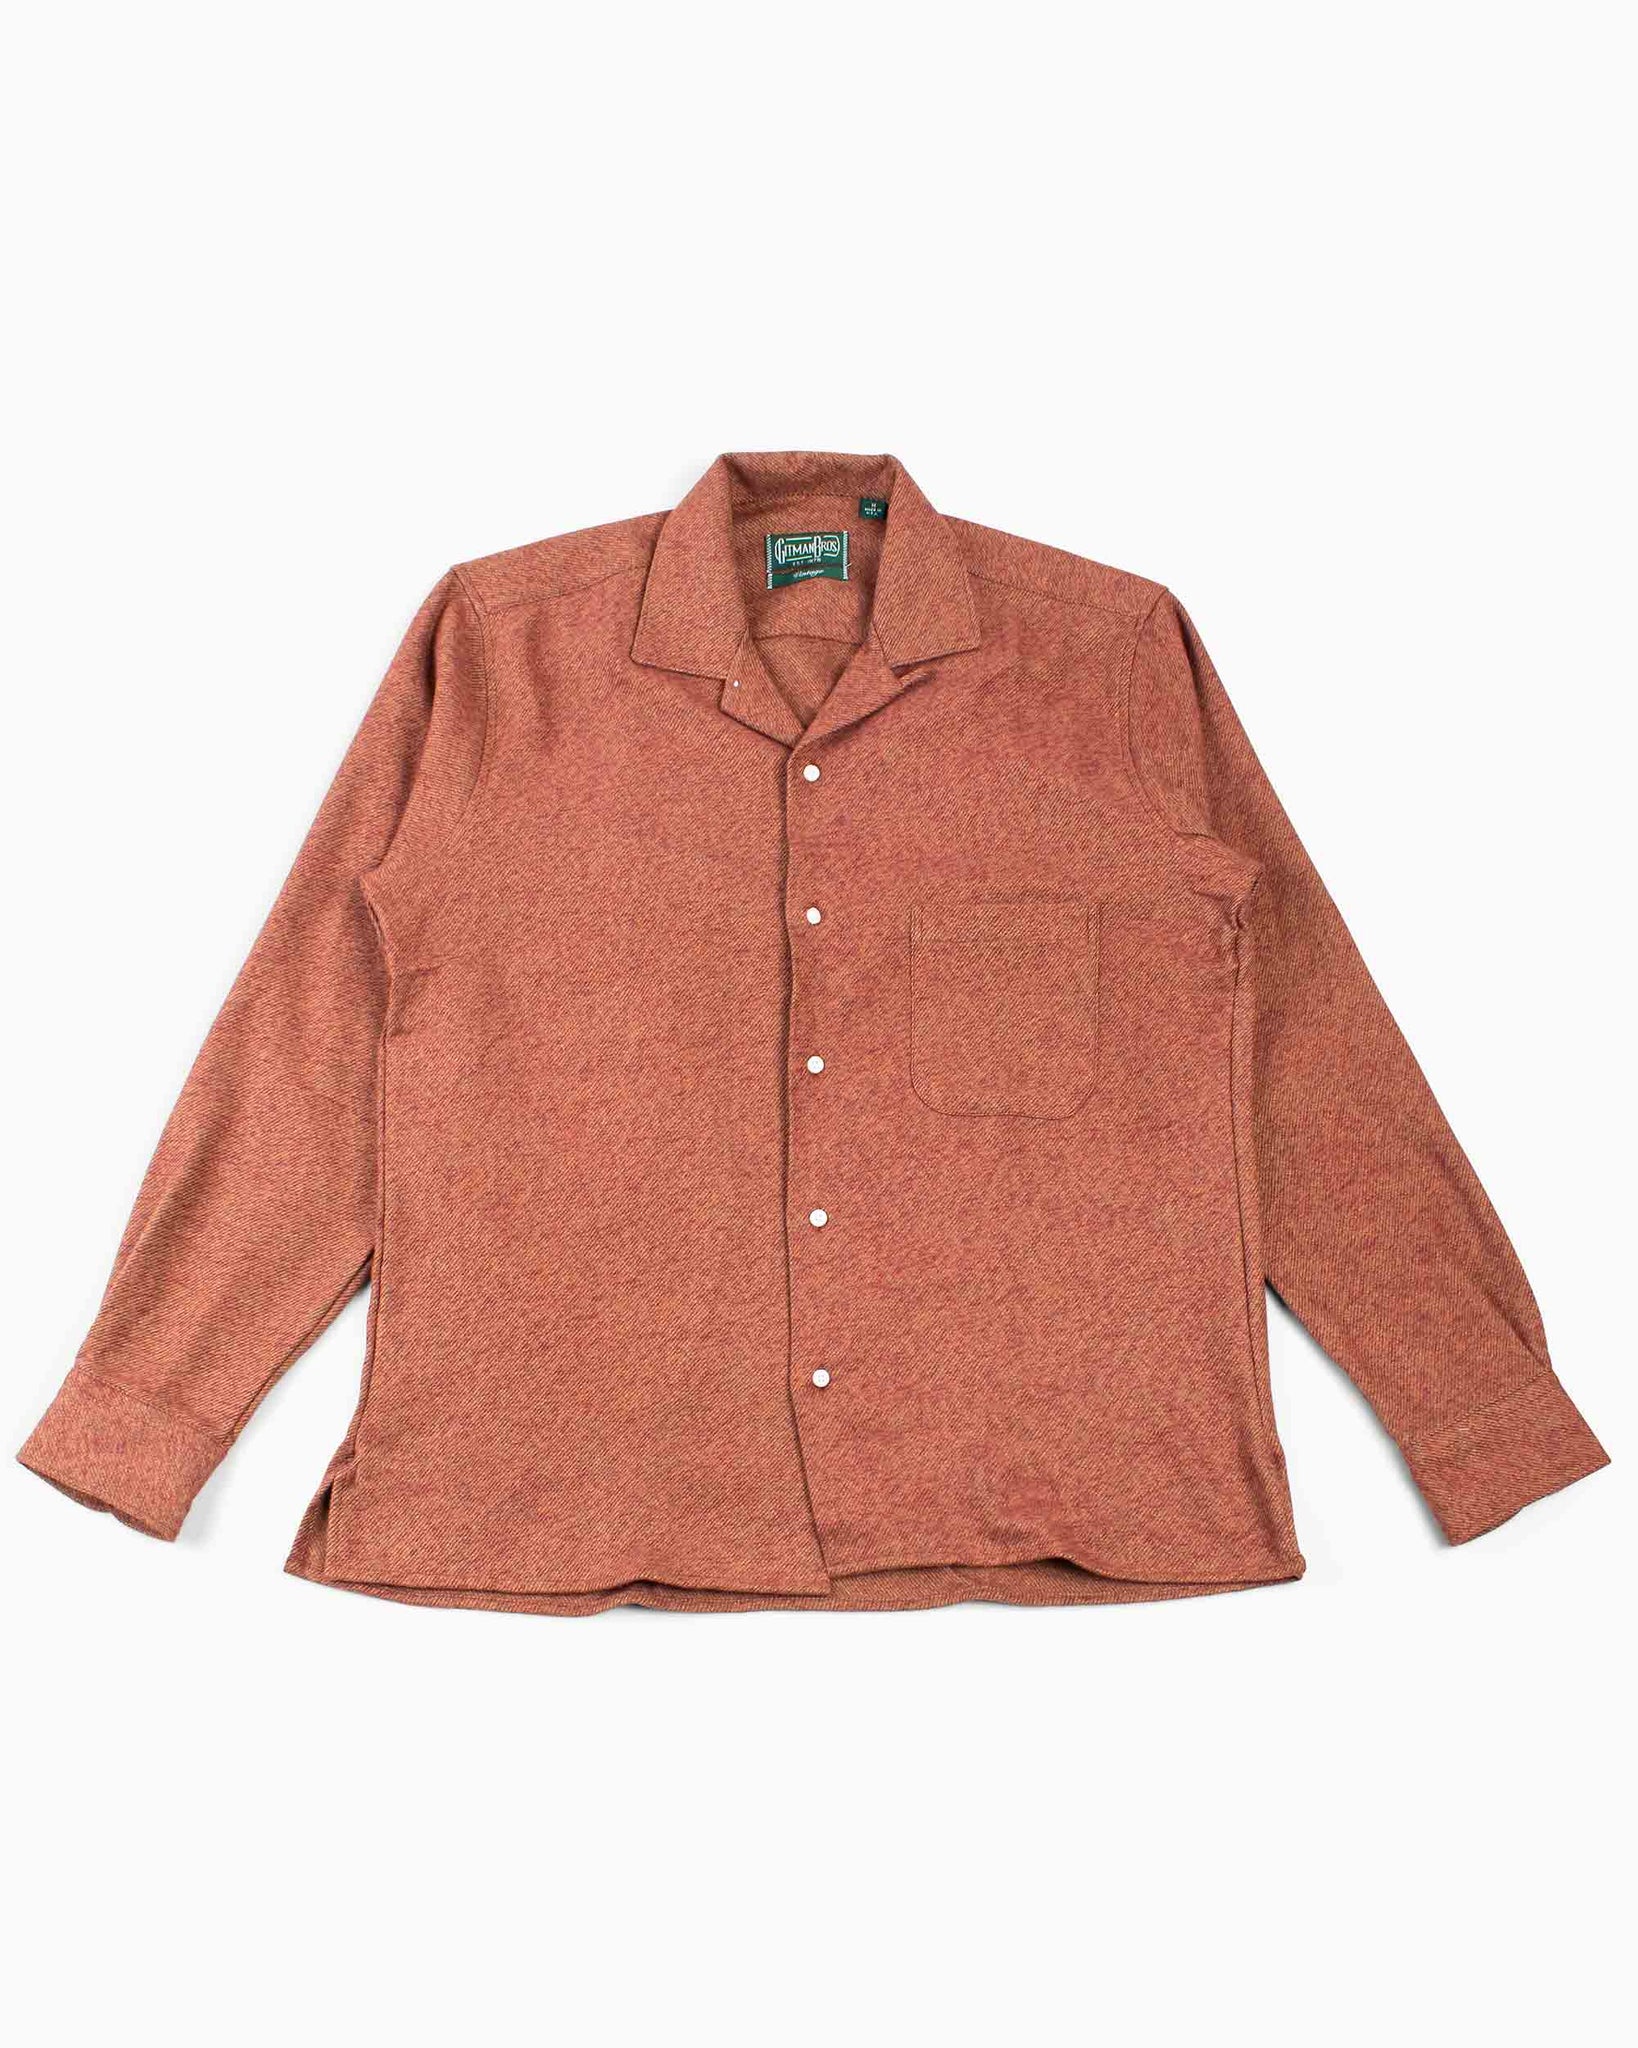 Gitman Vintage Bros. Brown Cotton Tweed Camp Shirt